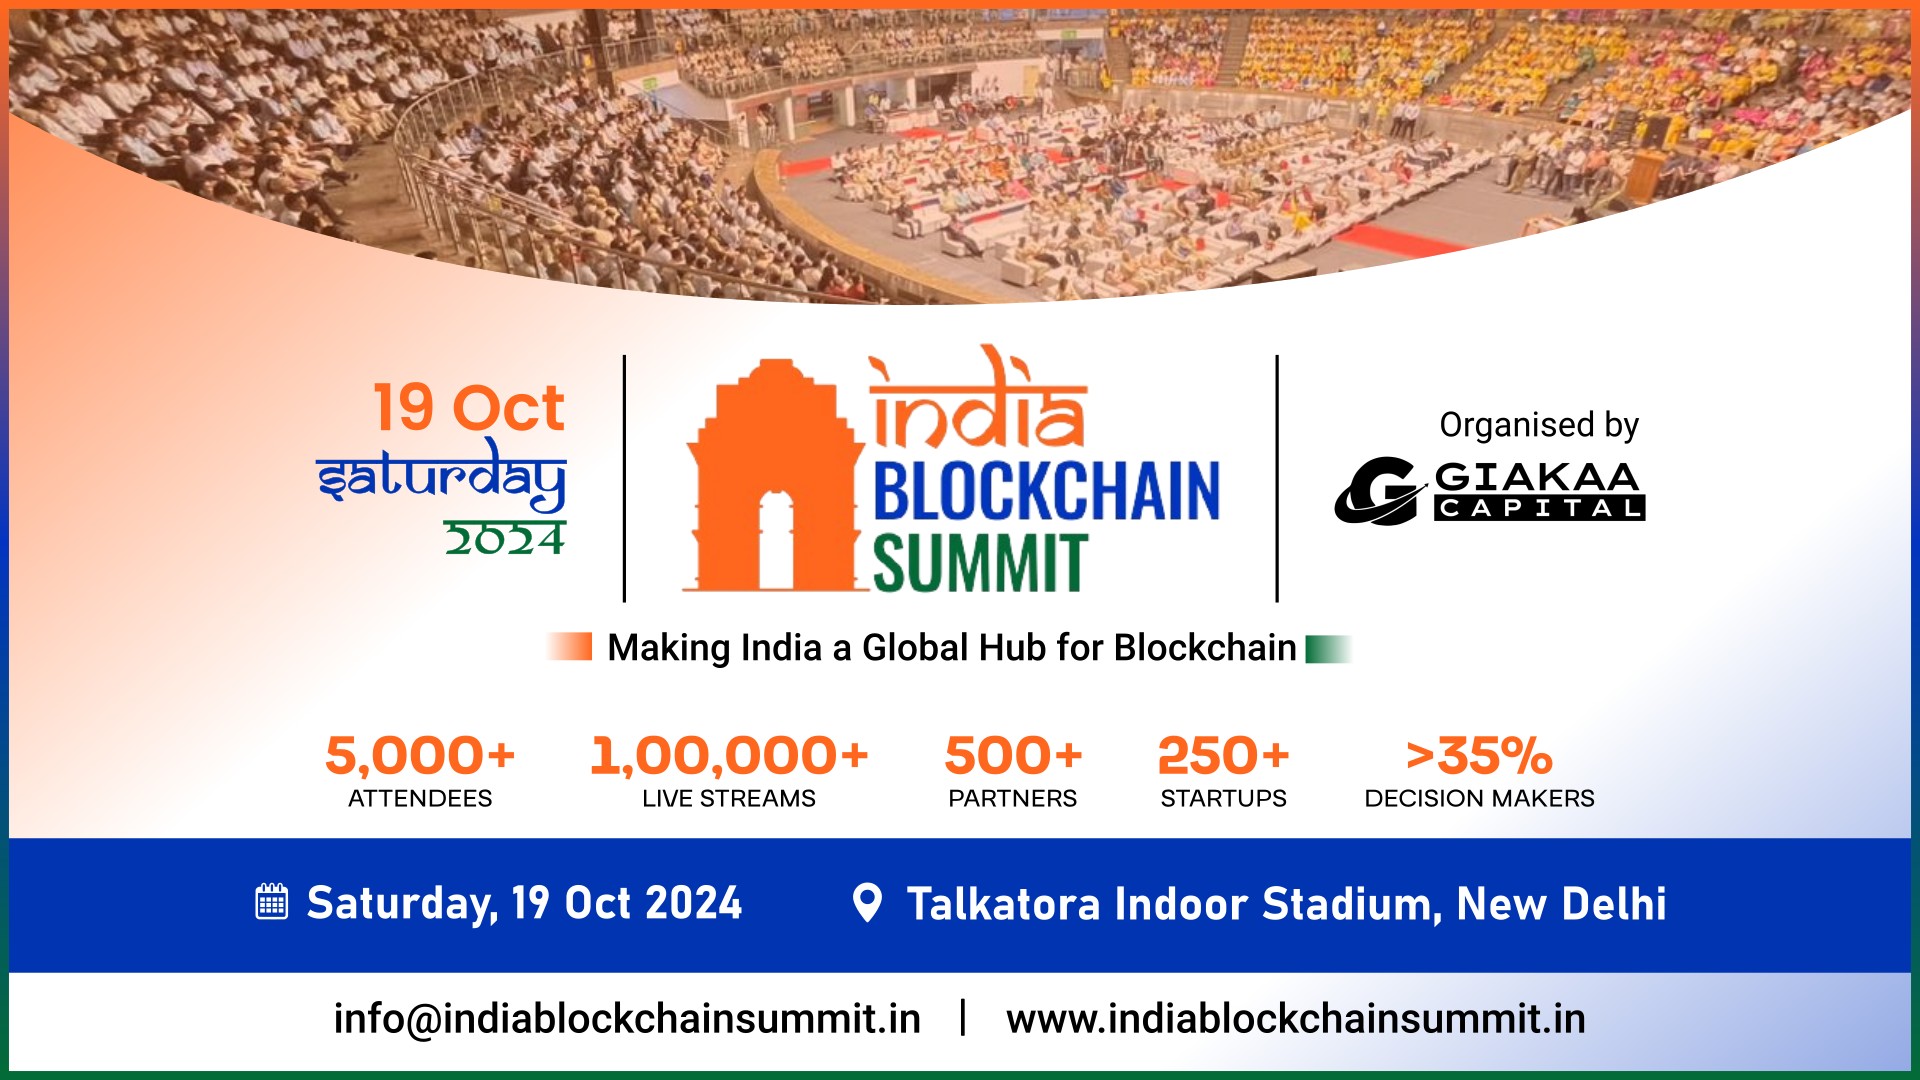 India Blockchain Summit 2024 organized by Giakaa Capital